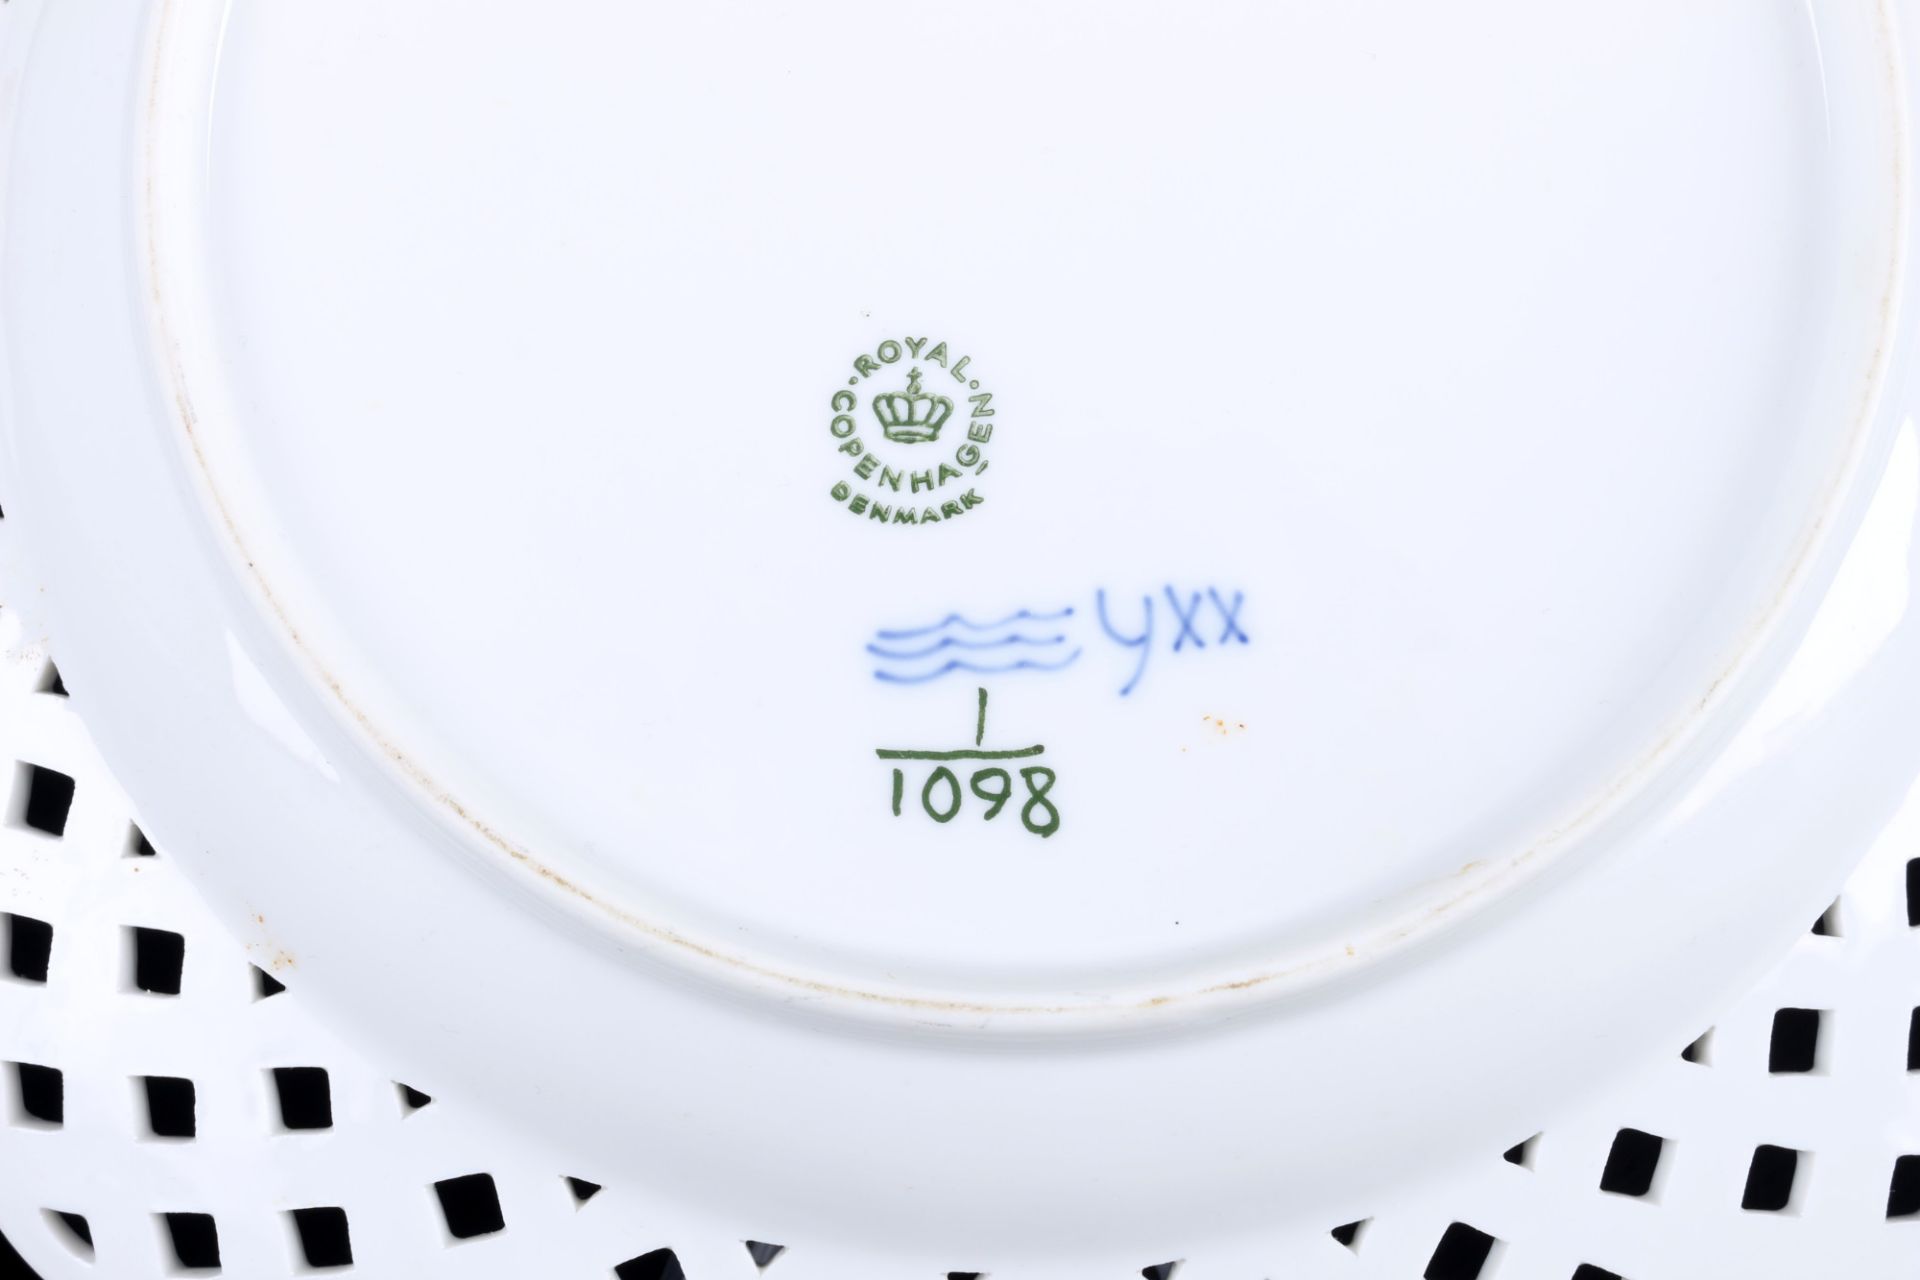 Royal Copenhagen Musselmalet Full Lace 2 splendor plates 1098 1st choice, Vollspitze Prunkteller, - Image 3 of 3